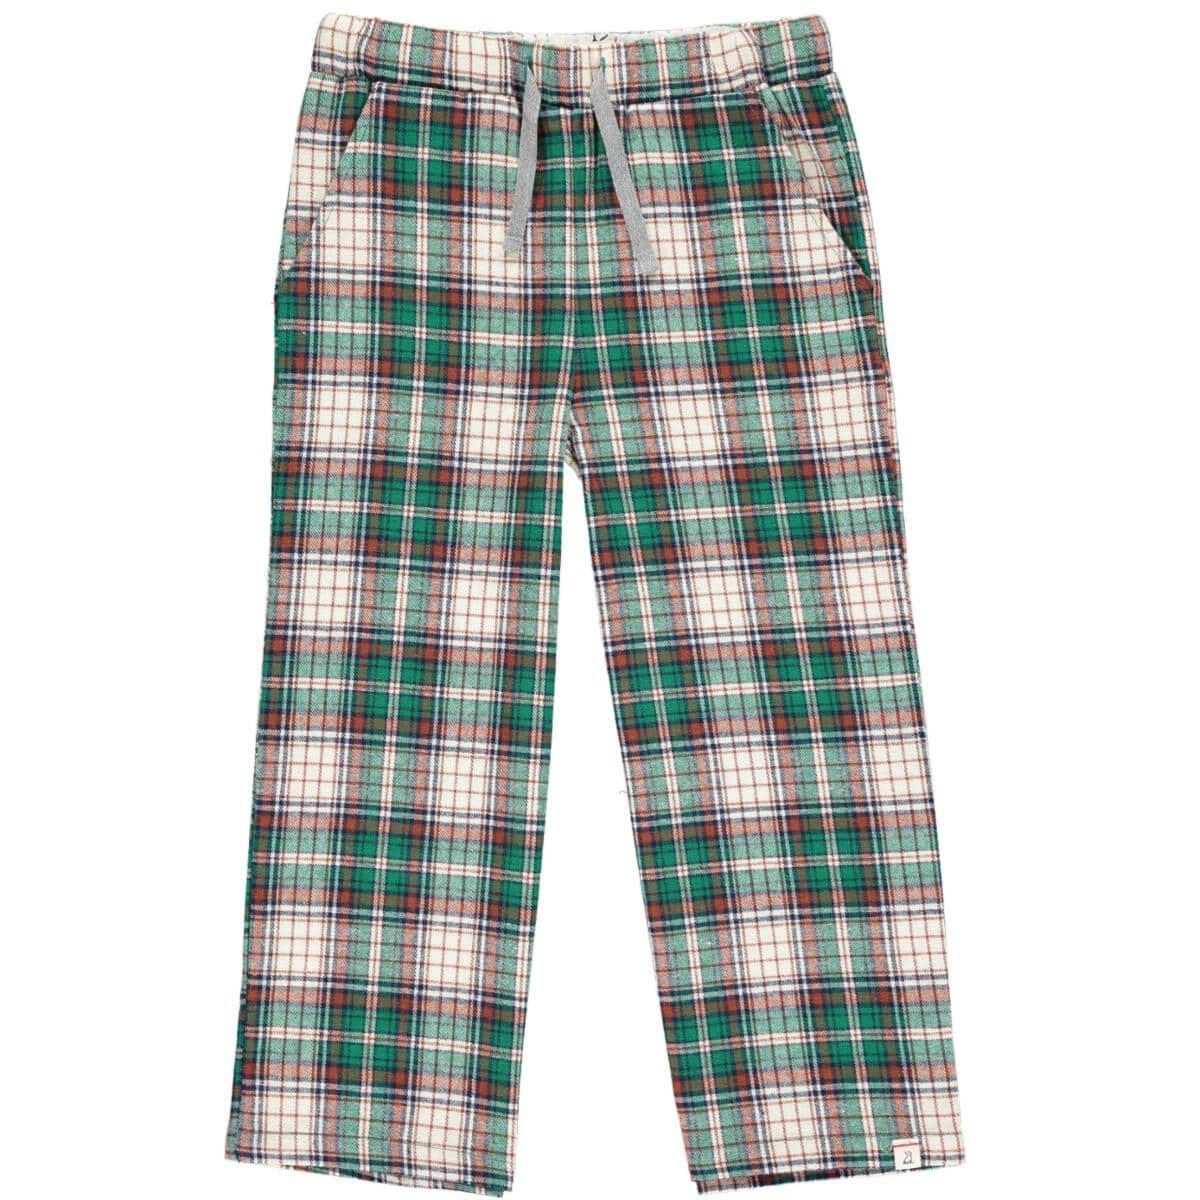 Rockford Lounge Pants - Green, Brown, Navy Plaid - Twinkle Twinkle Little One